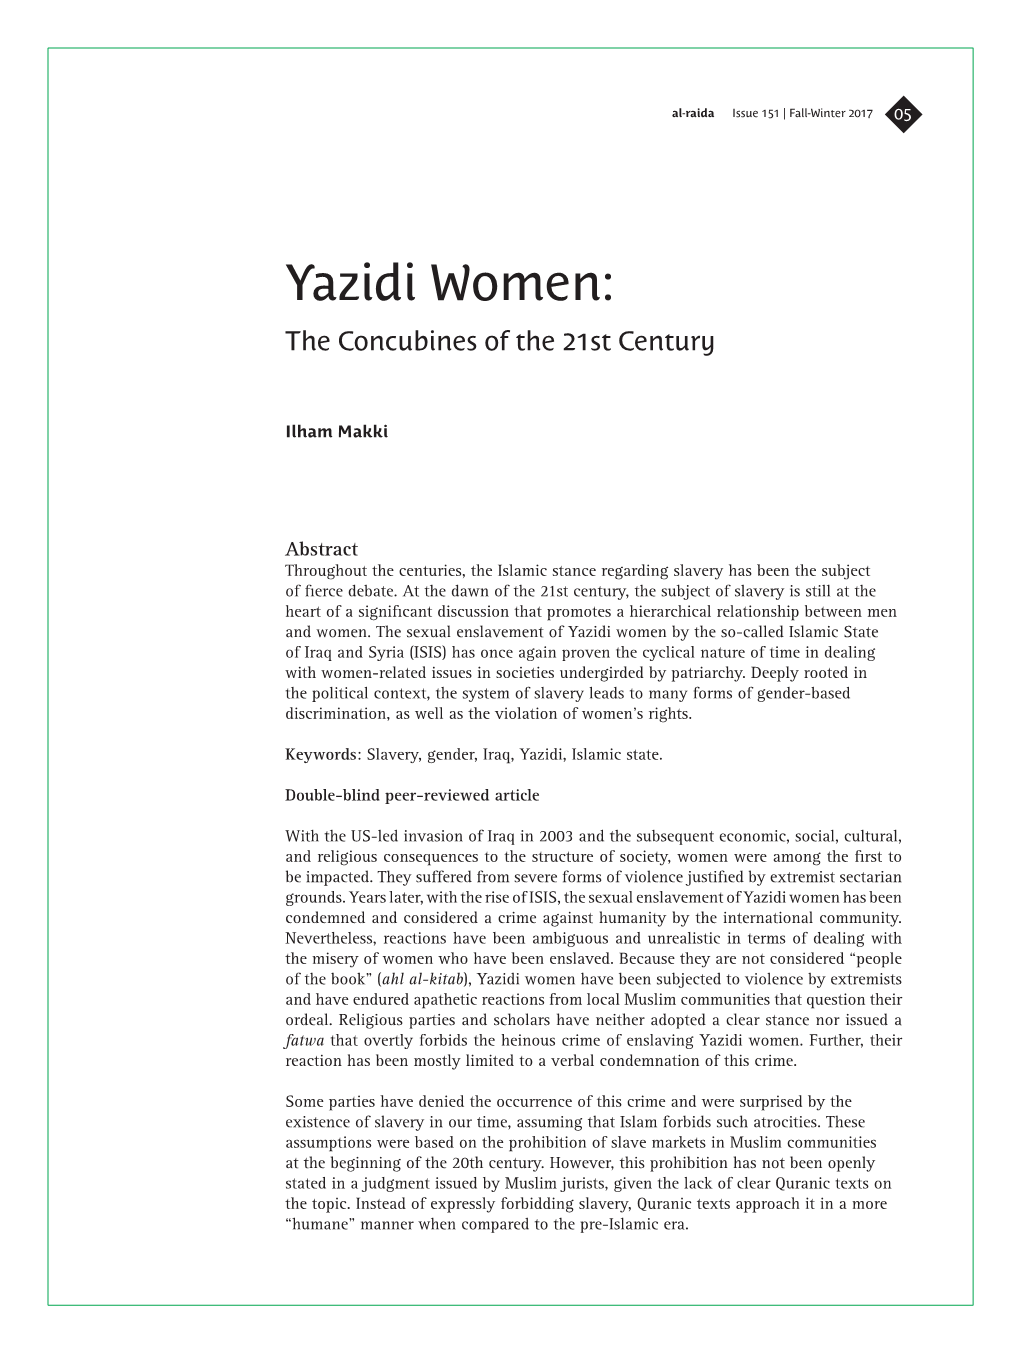 Yazidi Women: the Concubines of the 21St Century